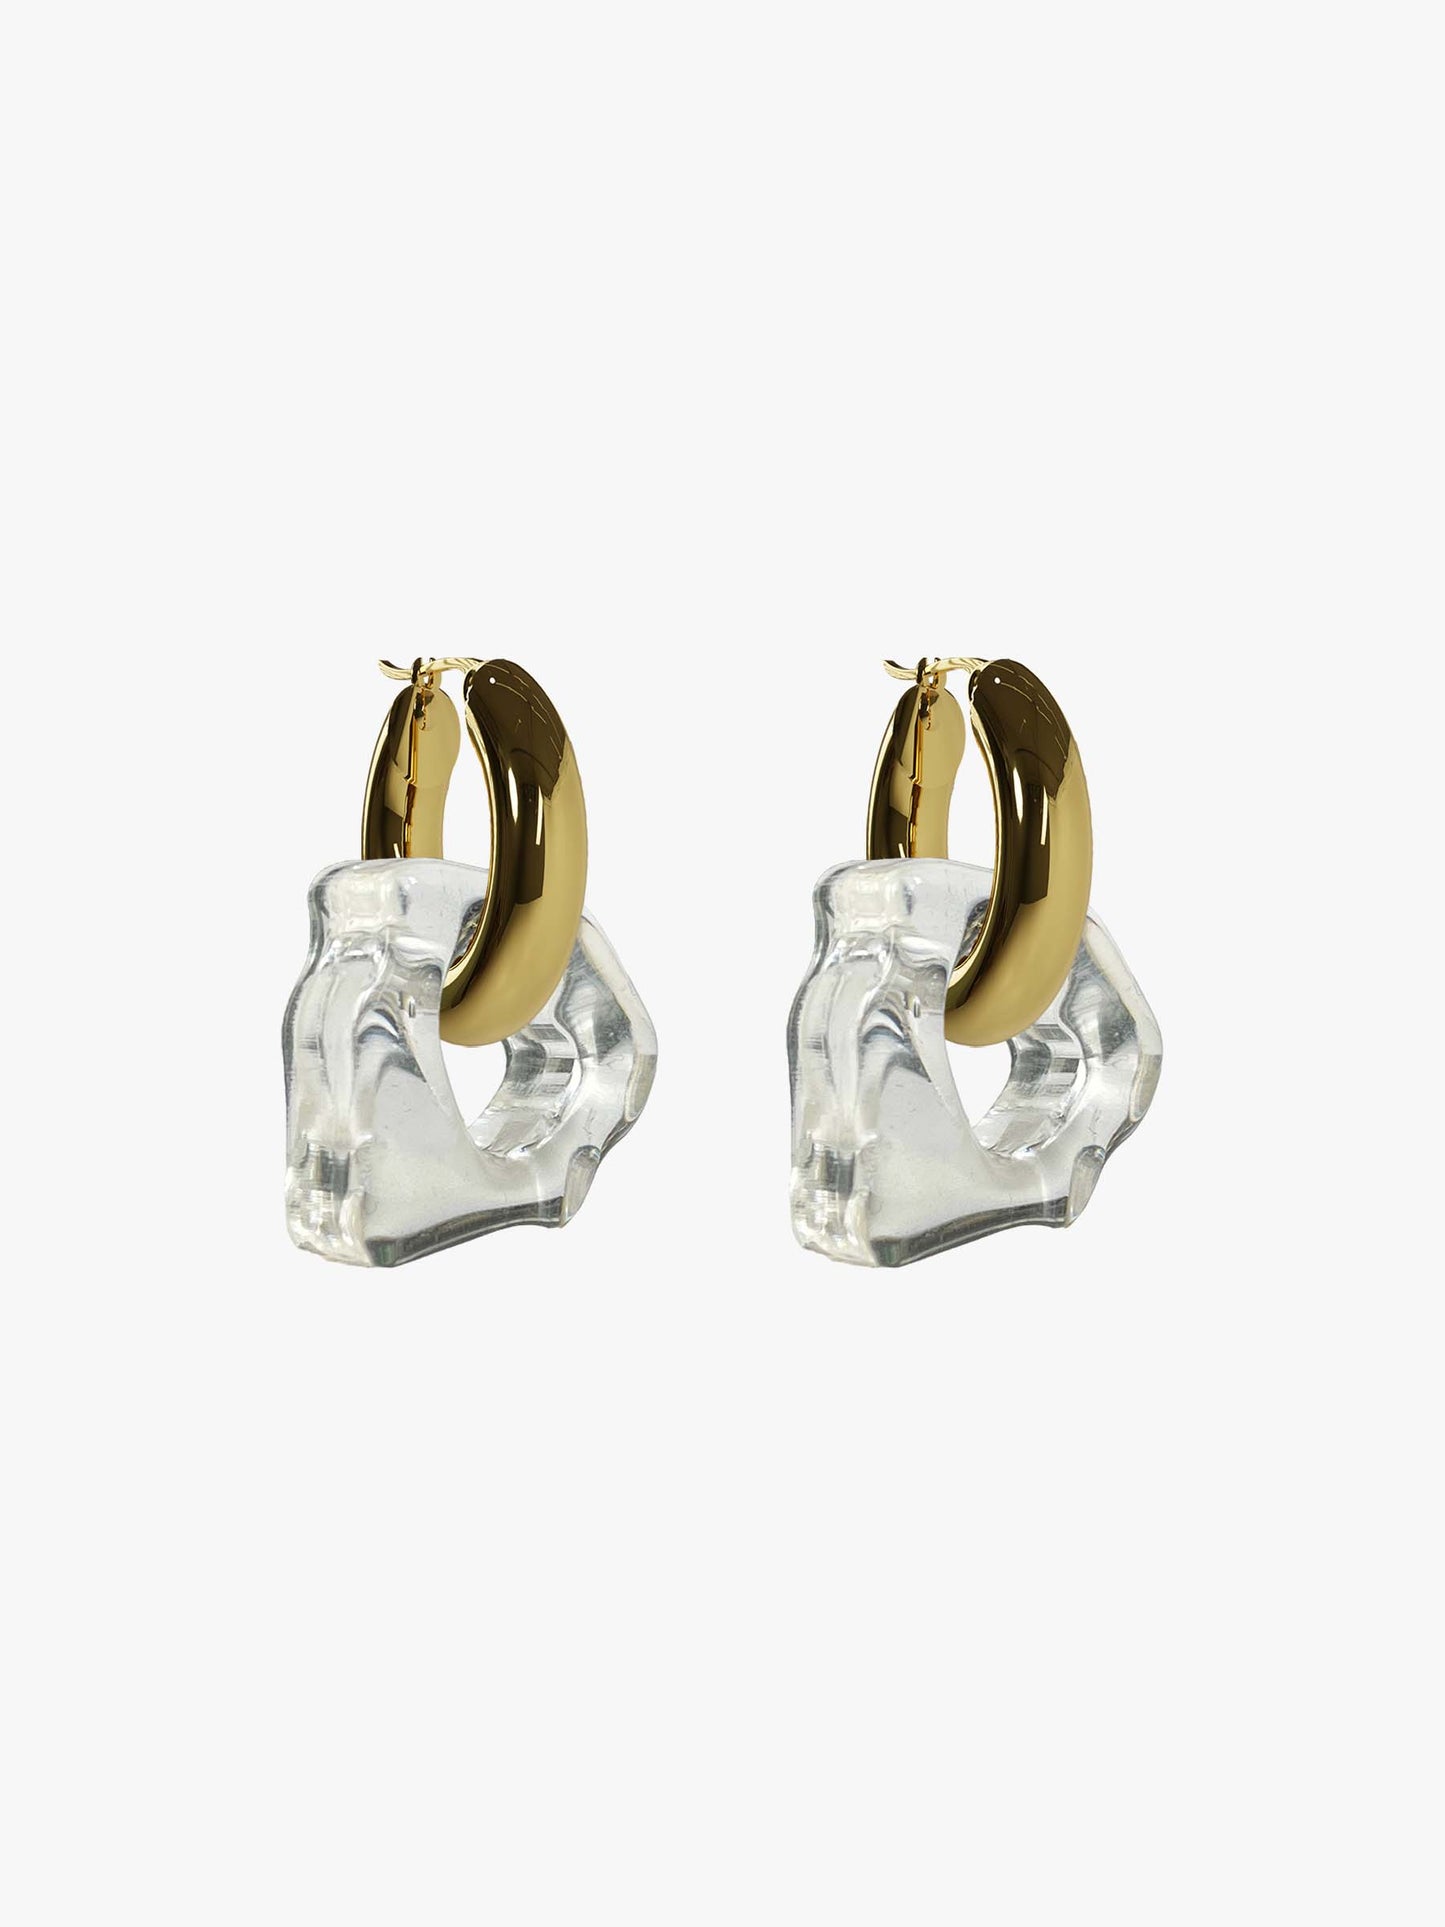 Ora transparant gold earring (pair)